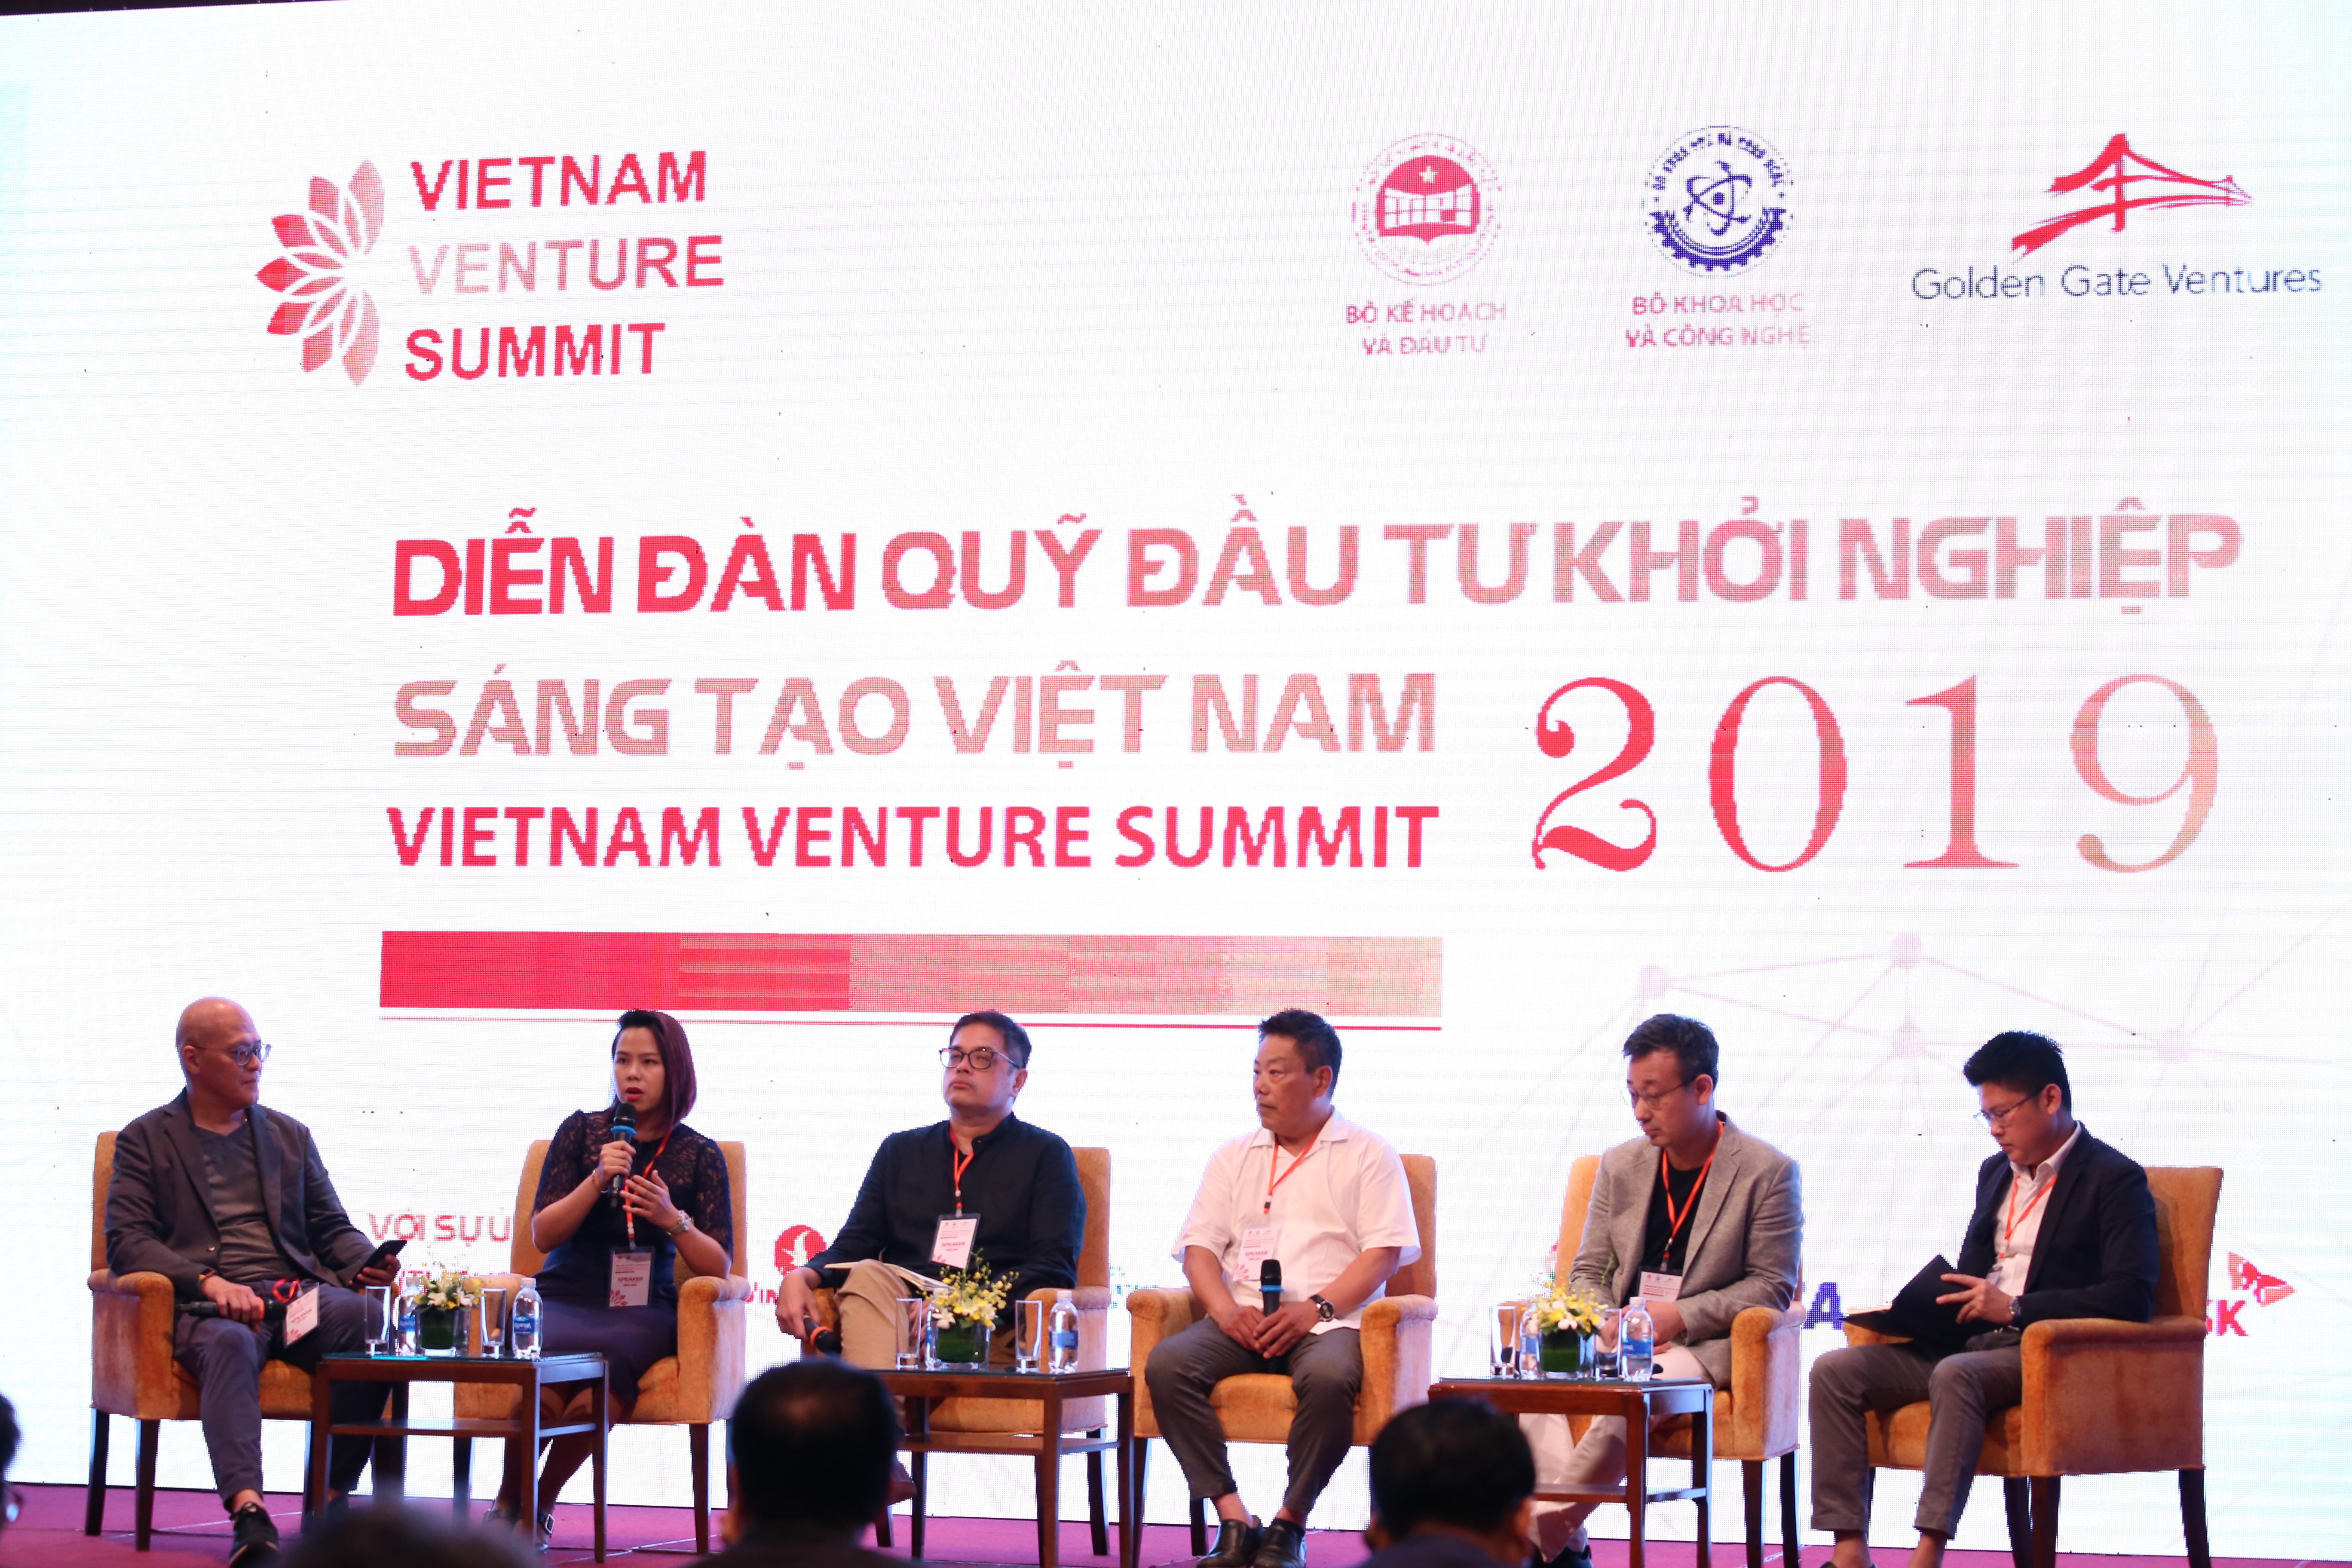 Vietnam Venture Summit 2019: Thêm thời cơ vàng - Rồi sao nữa?